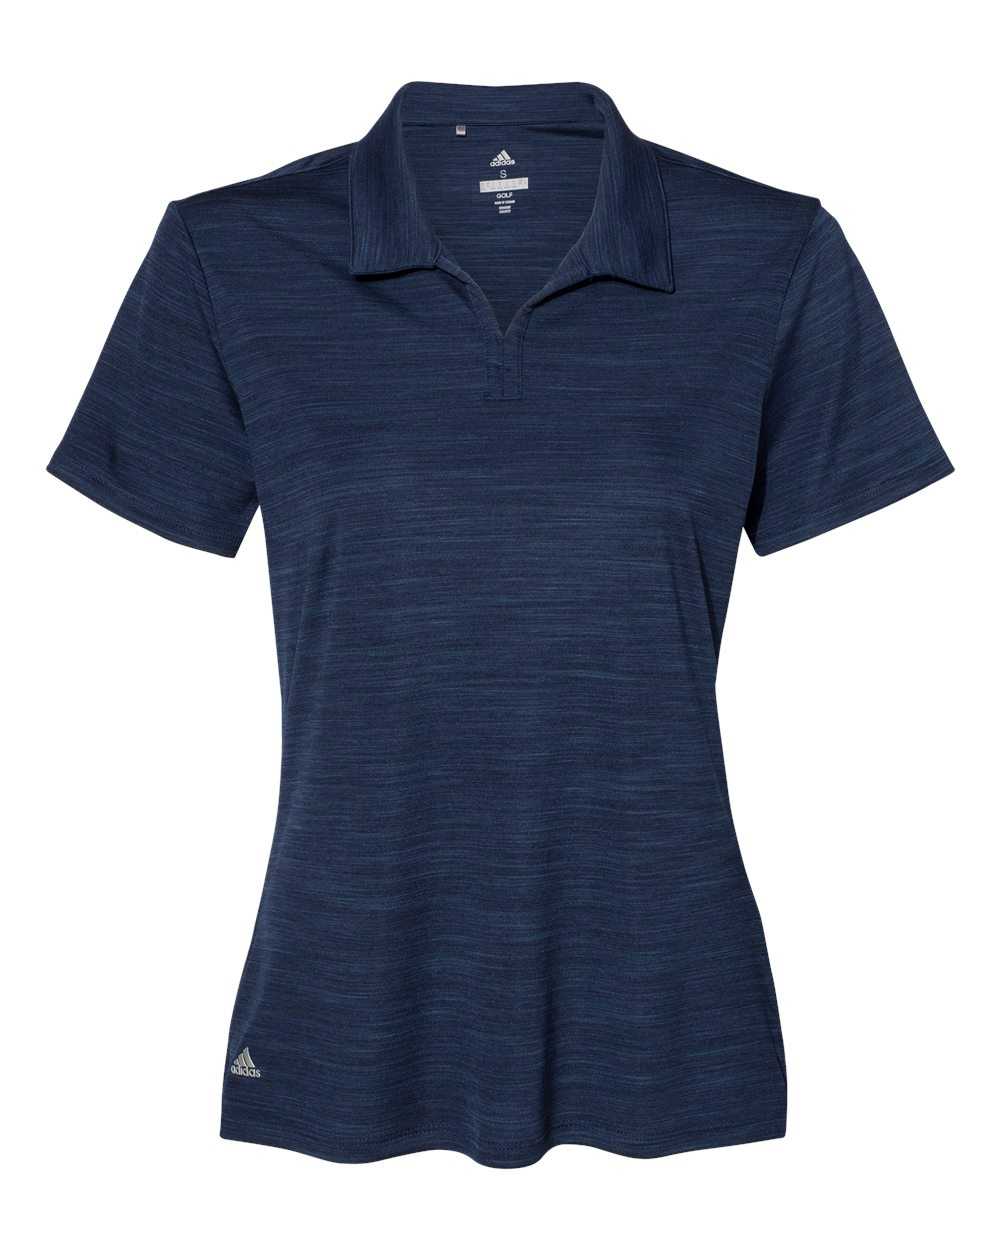 Adidas A403 Women's M??lange Sport Shirt - Collegiate Navy Melange - HIT a Double